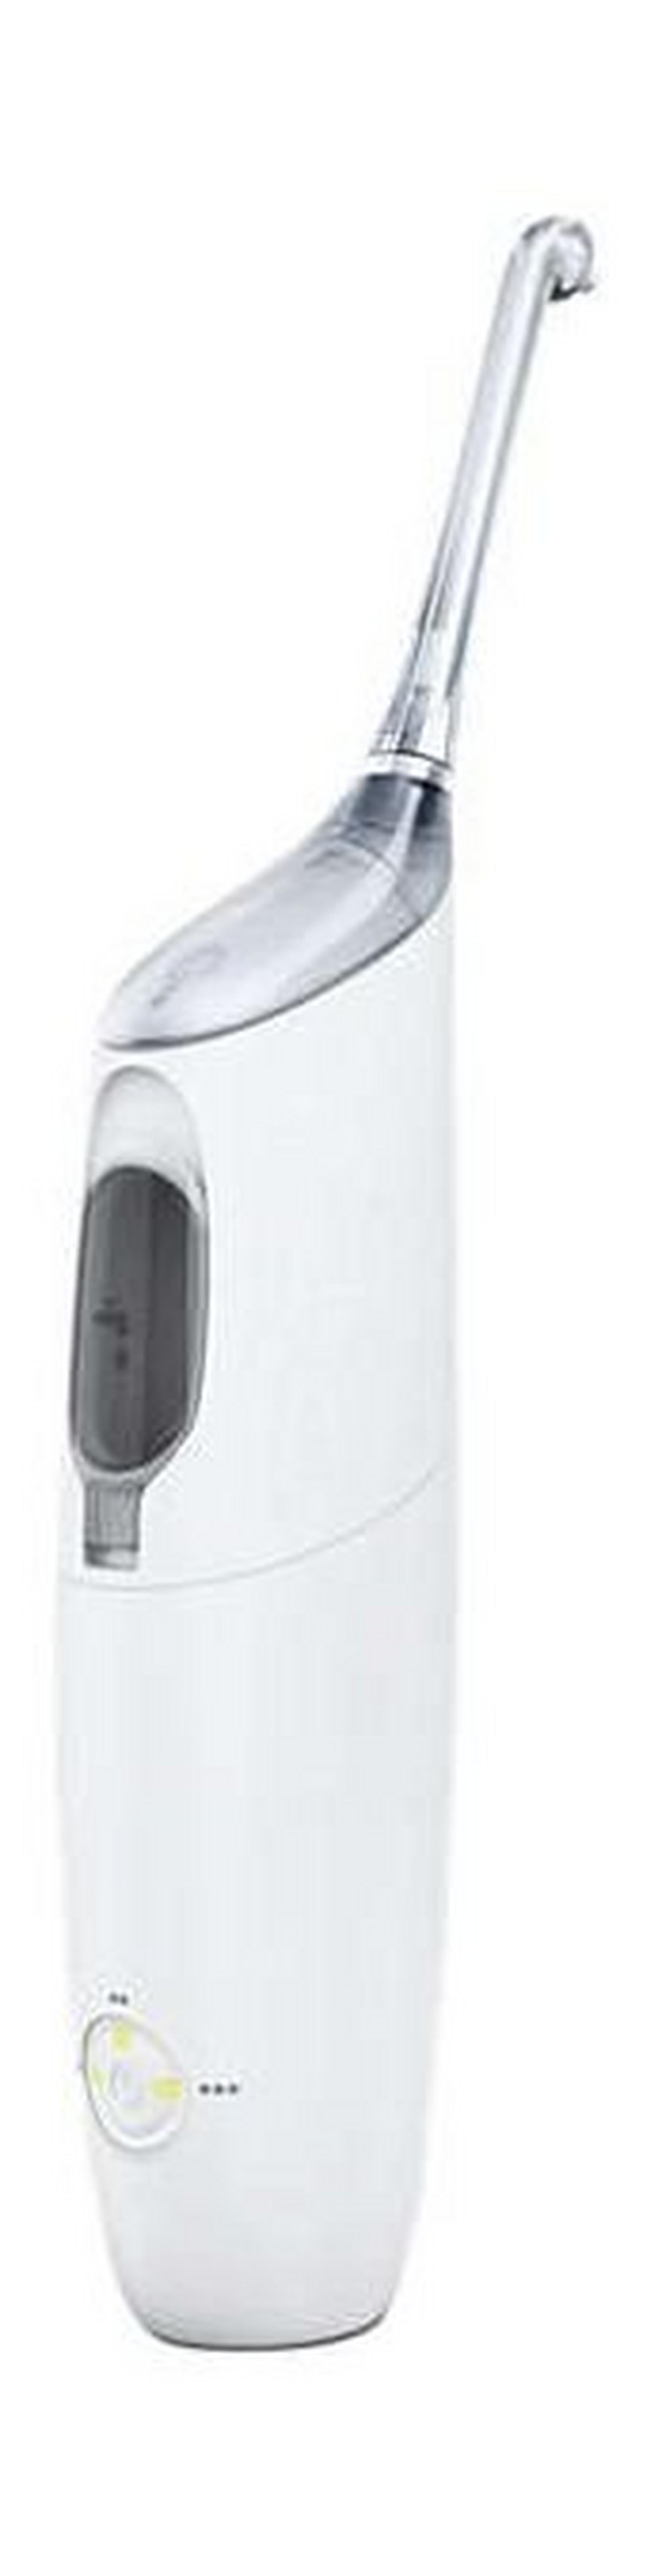 Philips Sonicare AirFloss Ultra Pro Interdental Cleaner (HX8331/01) – White